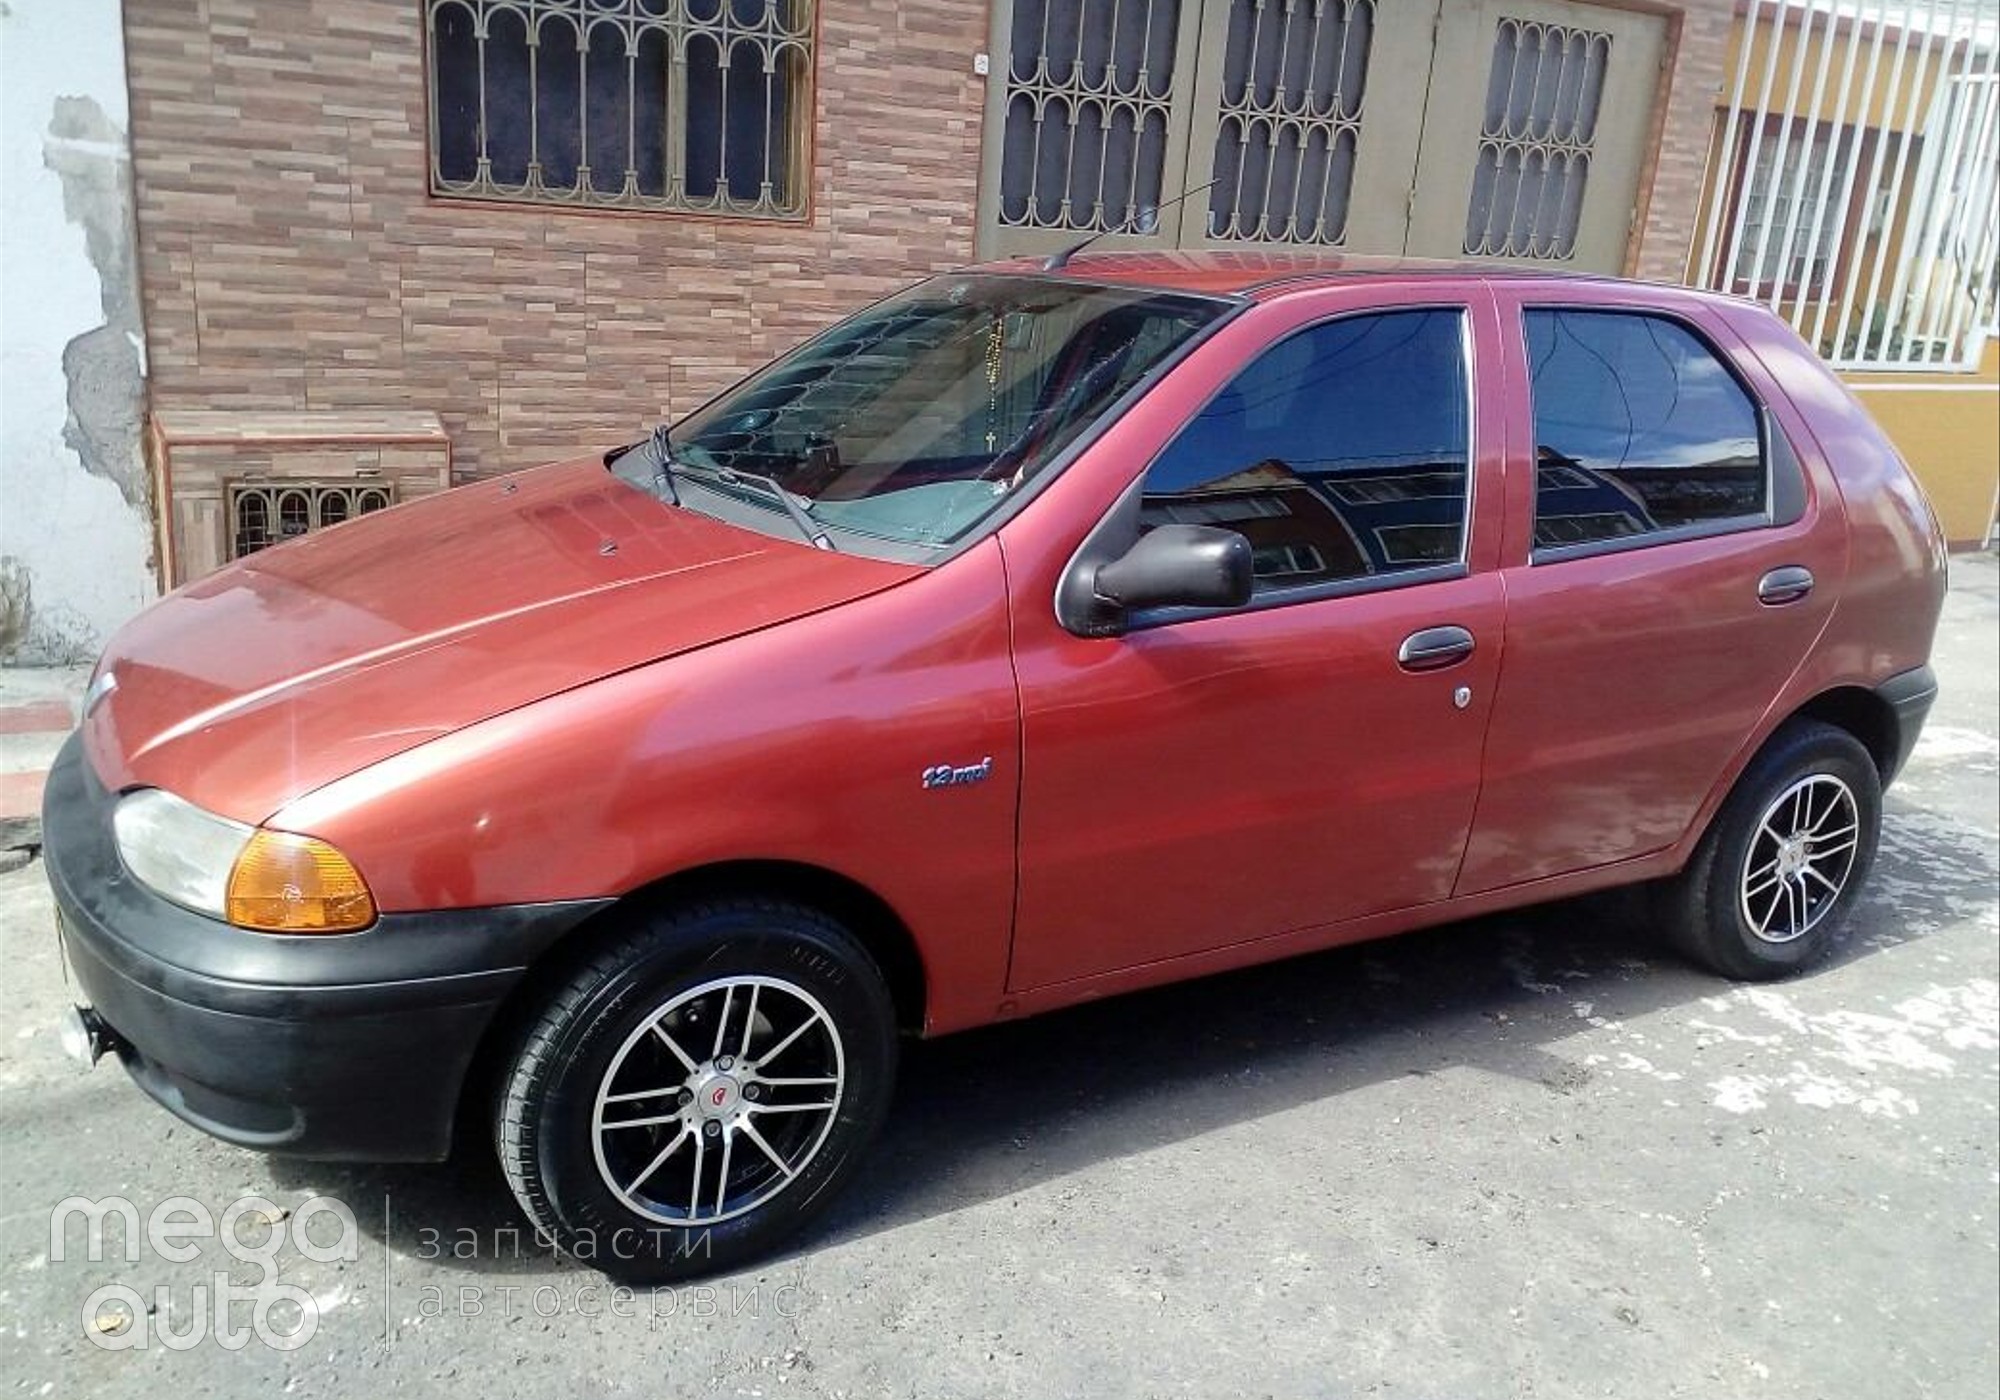 Fiat Palio I 1997 г. в разборе